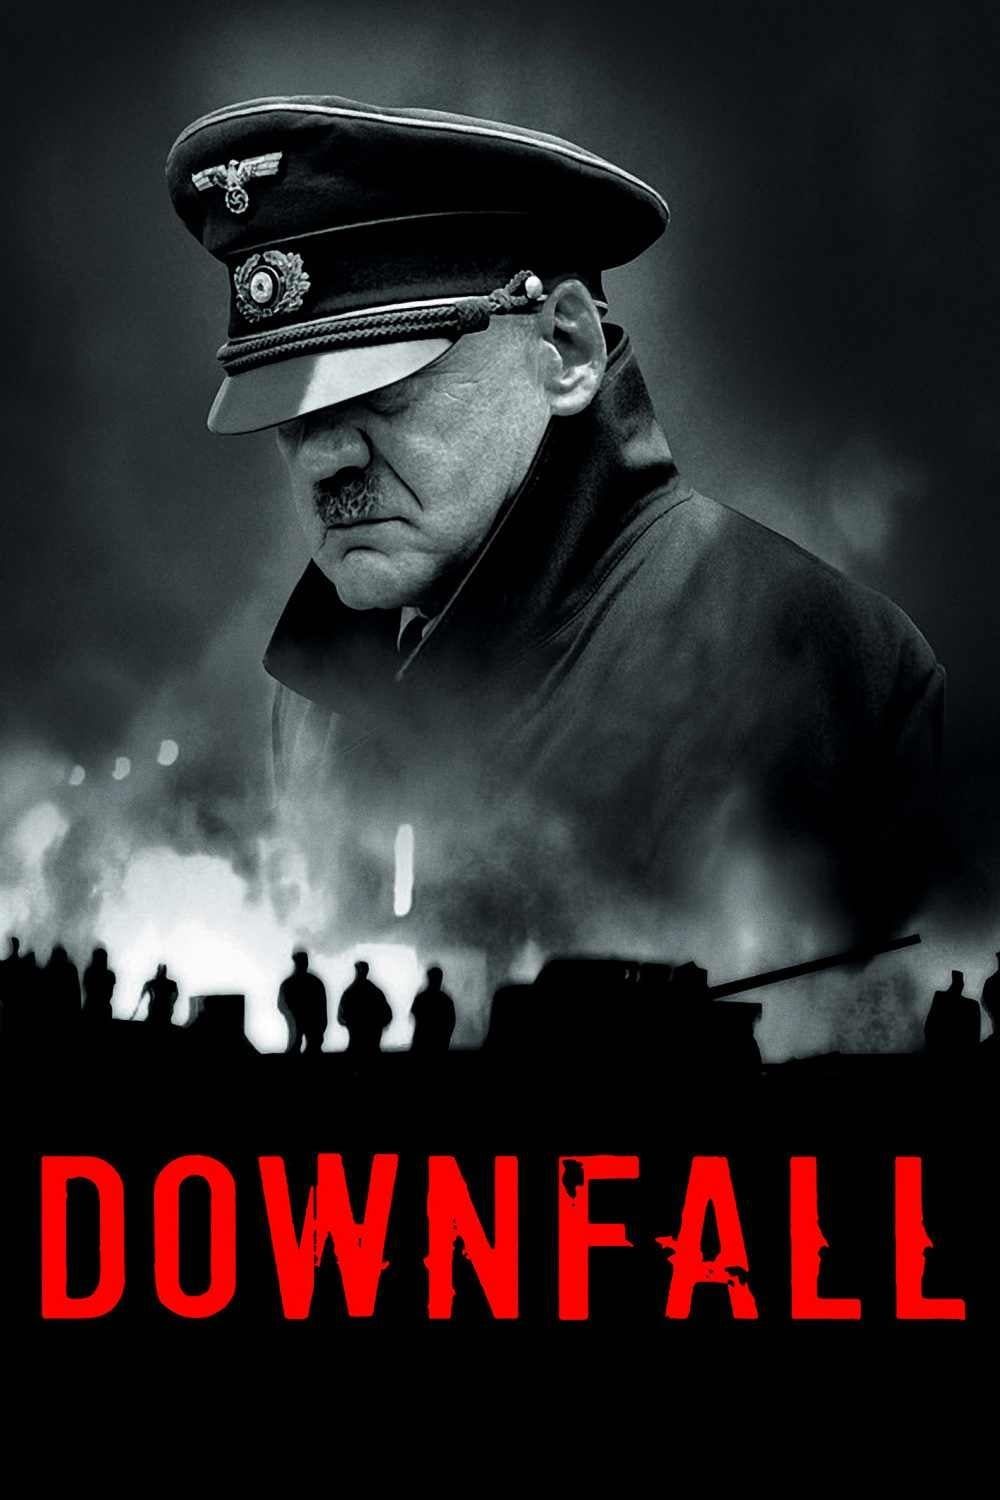 Downfalll